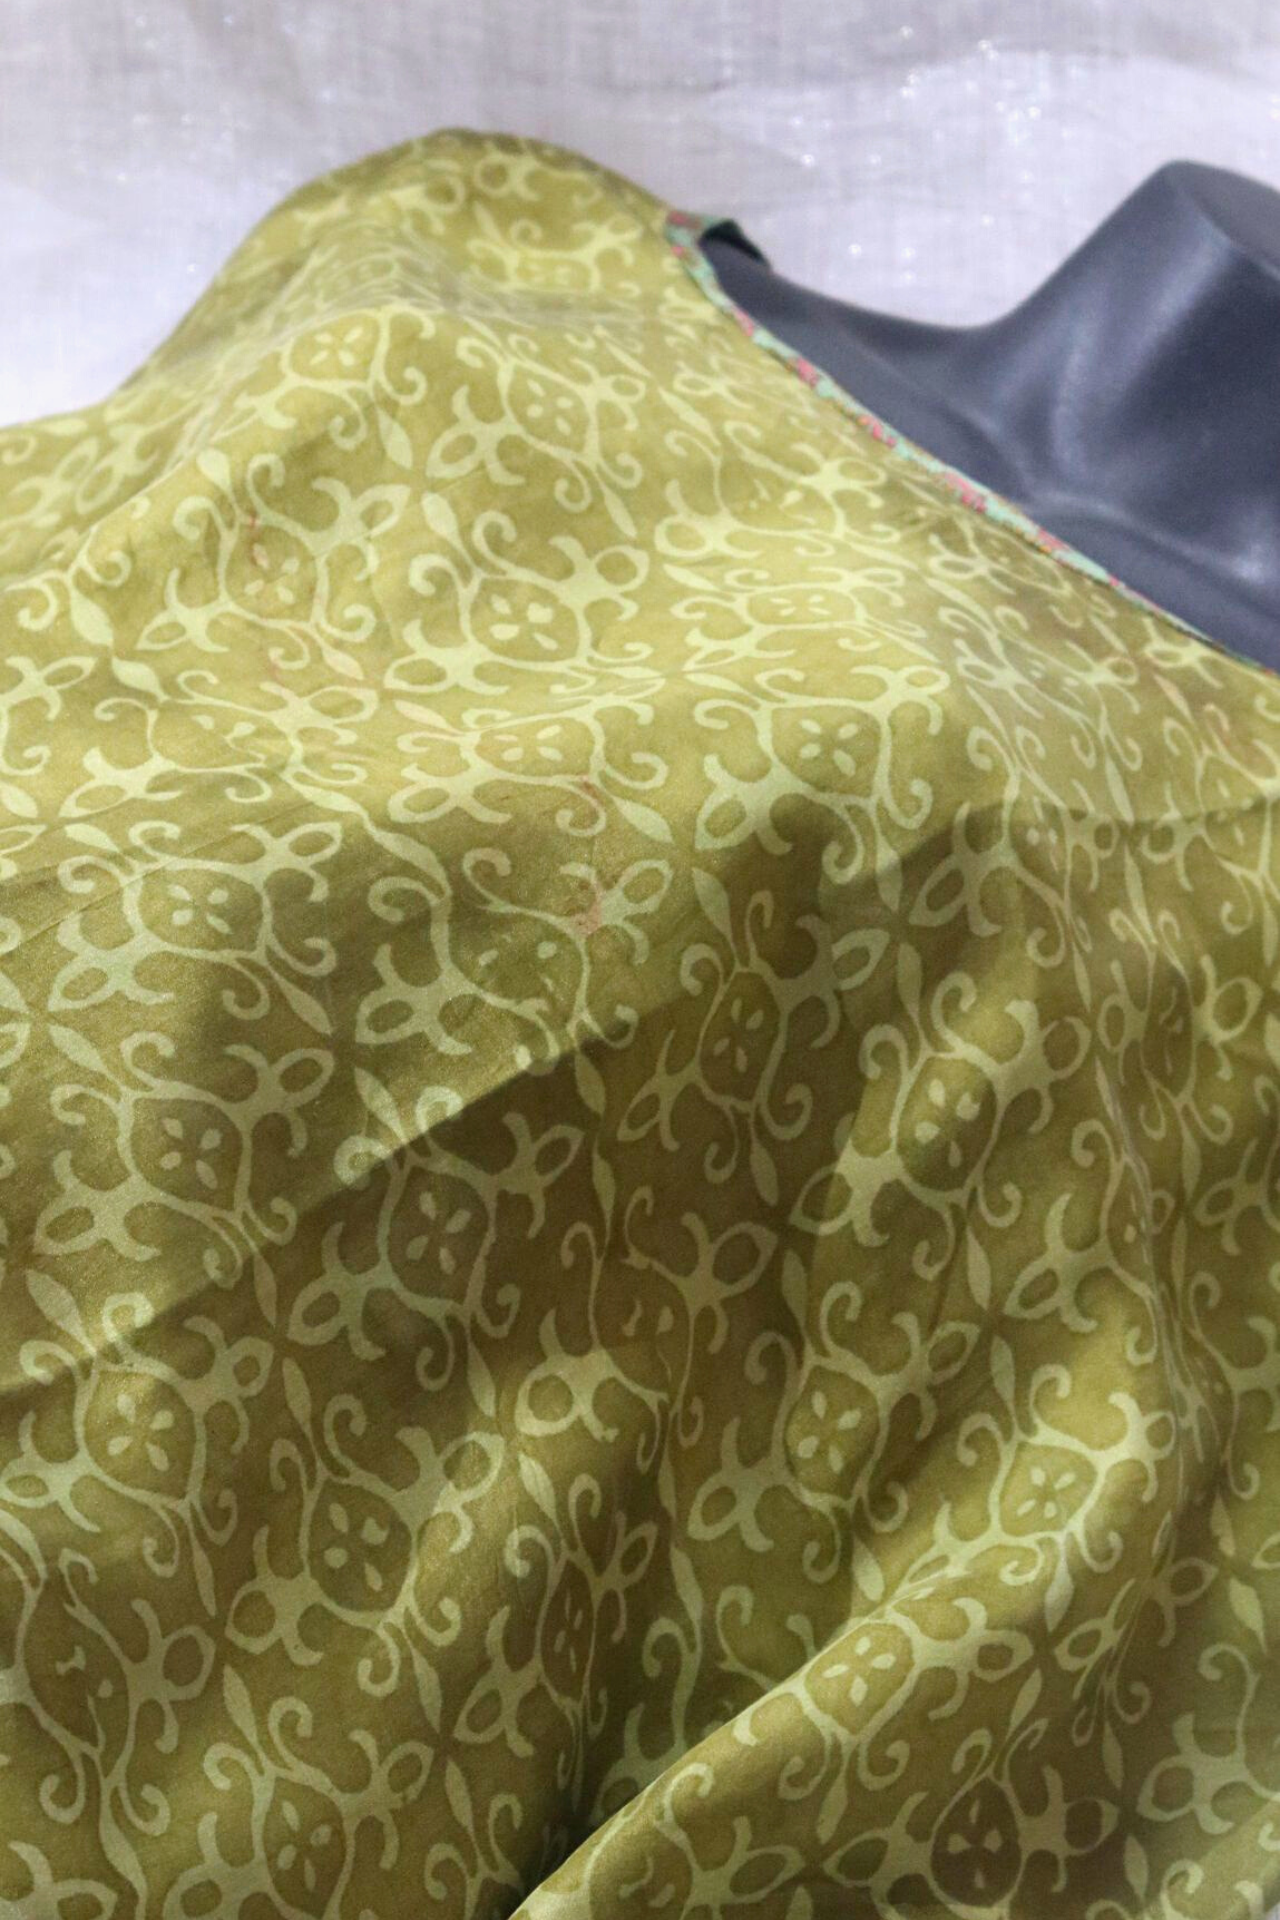 At Your Leisure, vintage sari top. 100% silk. Free size.